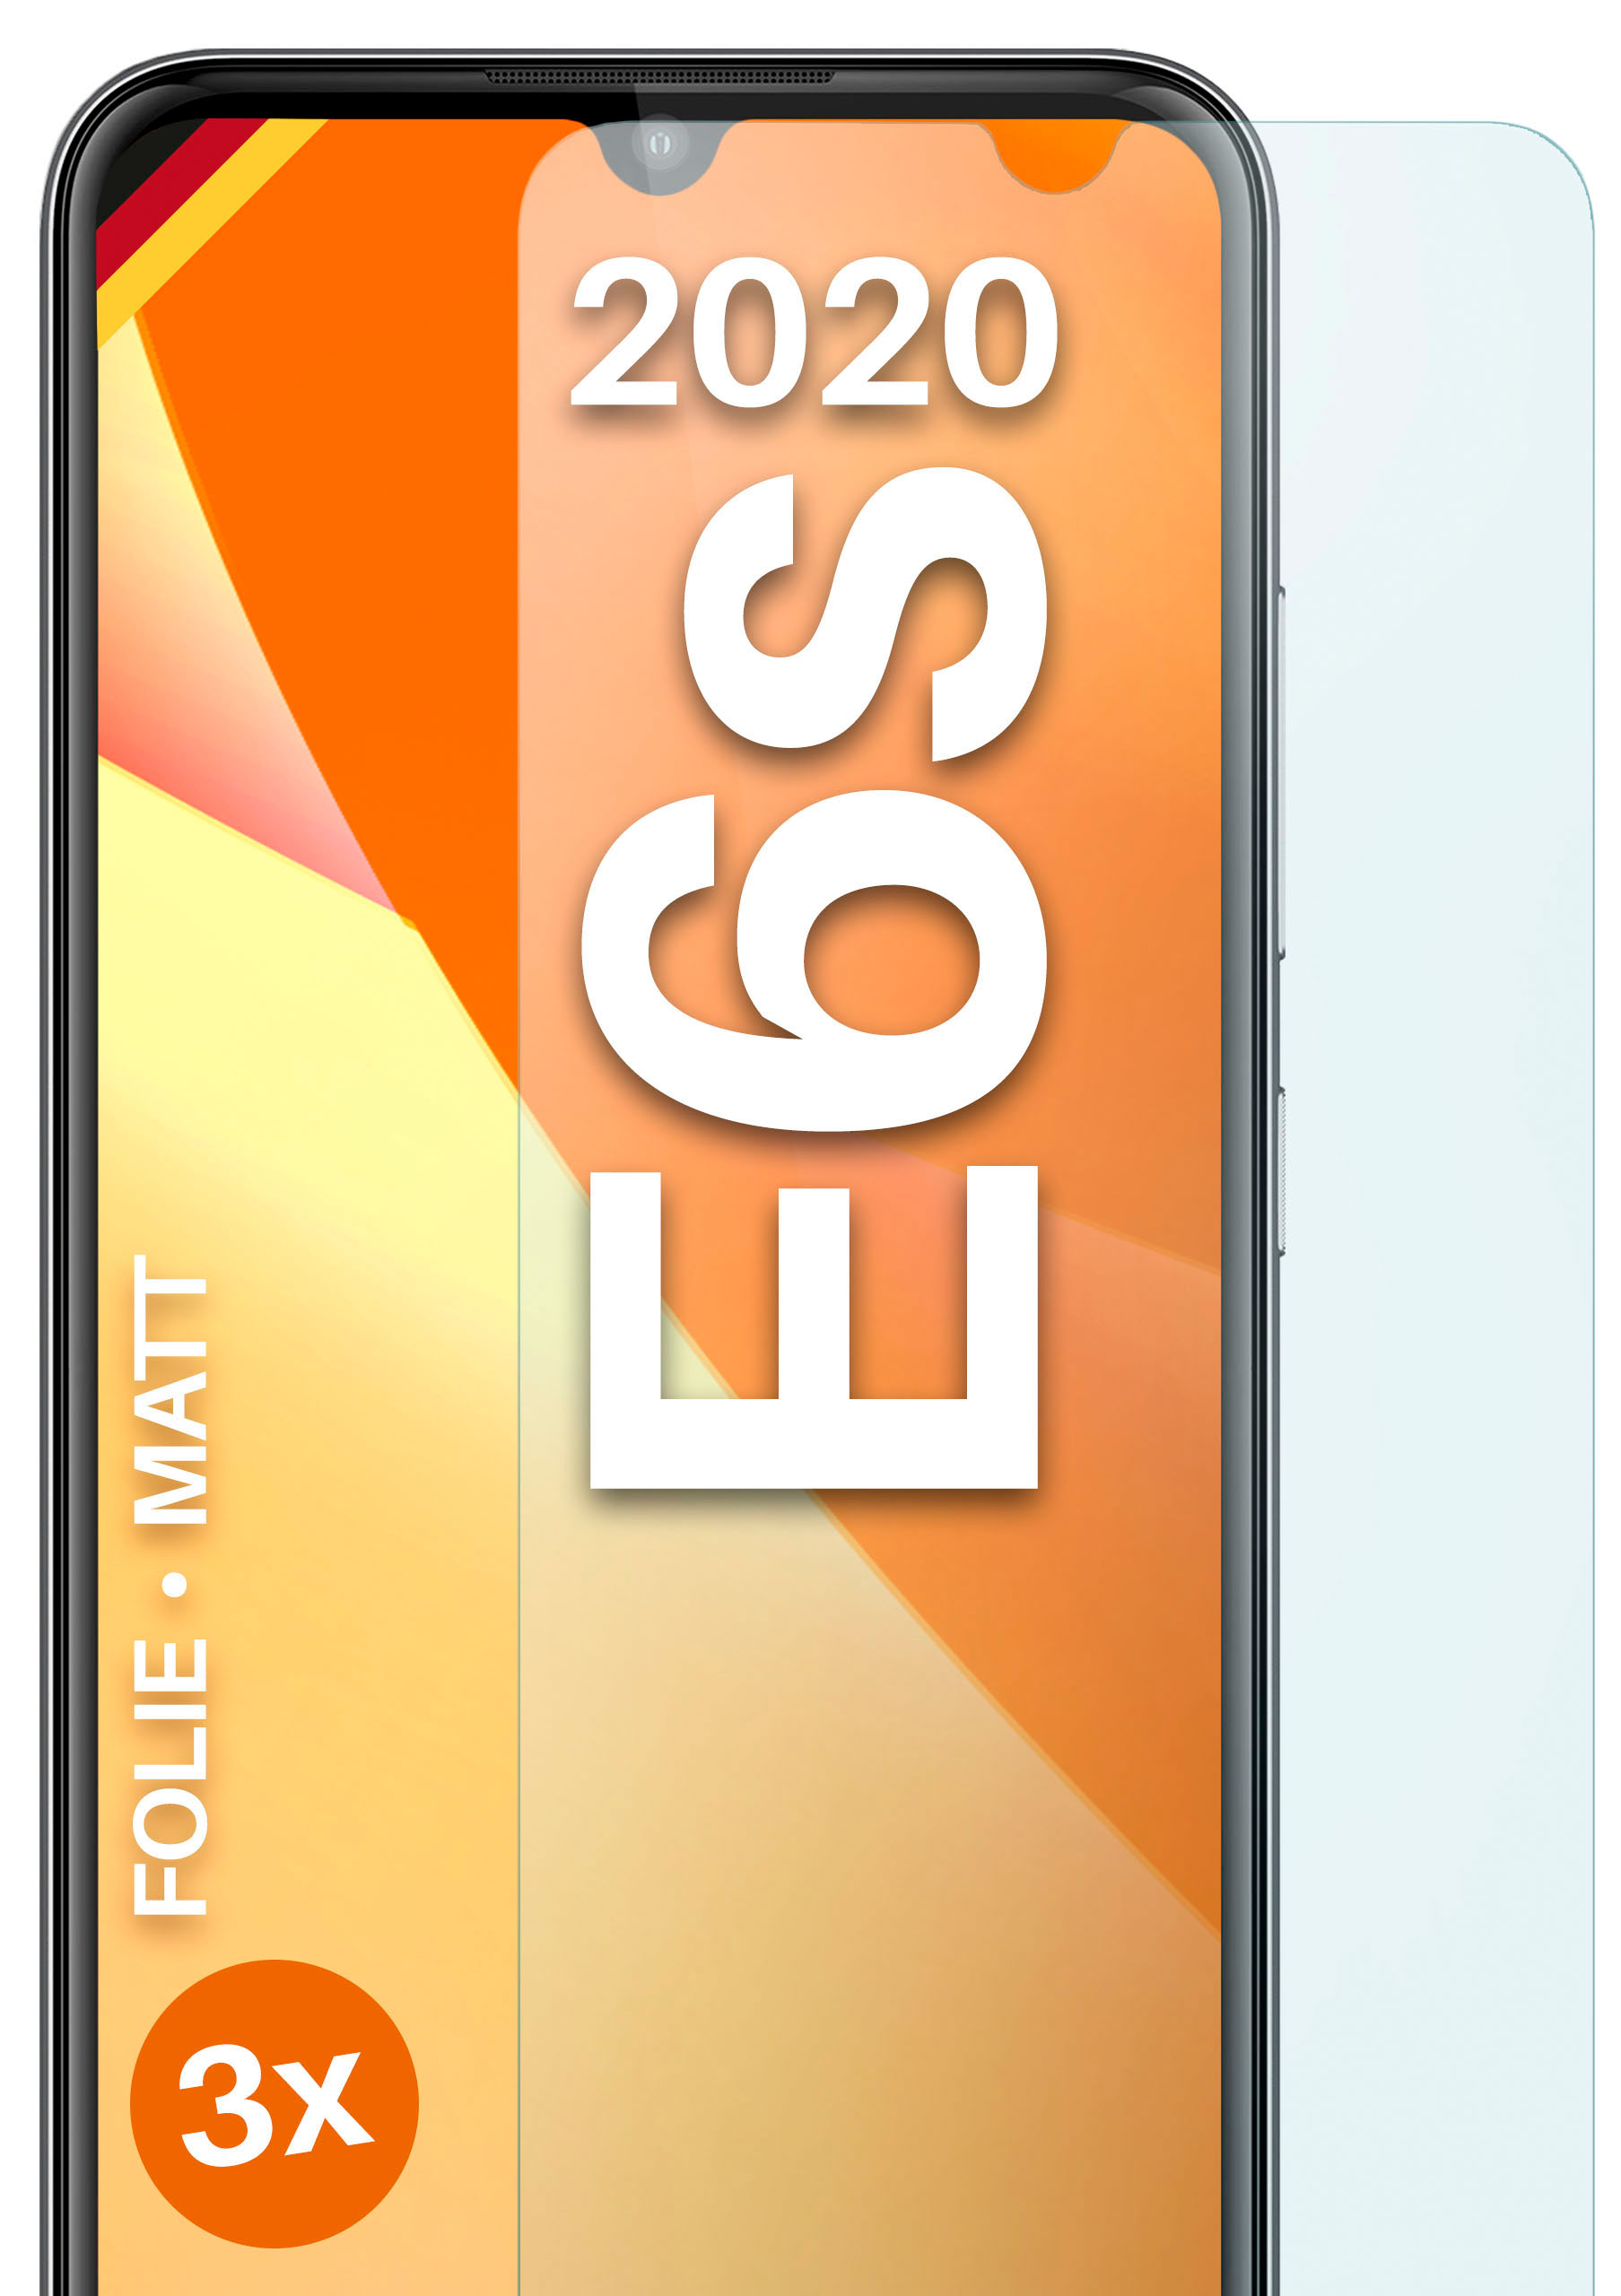 MOEX 3x Schutzfolie, (2020)/E6i) Displayschutz(für matt E6s Motorola Moto